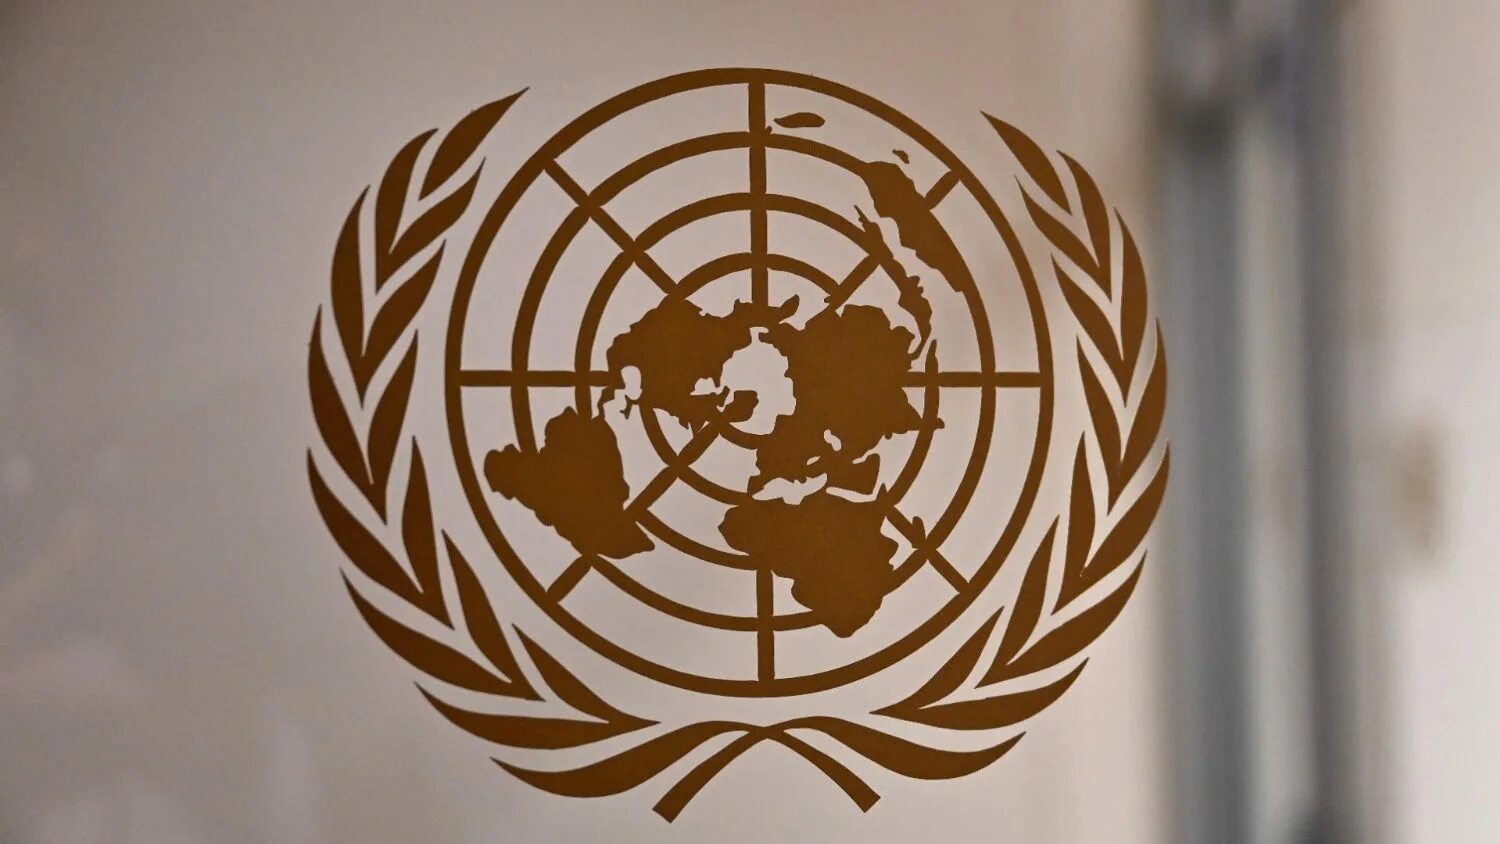 Оон о терроризме. Эмблема ООН. Египет ООН. ООН Россия. Совбез ООН.